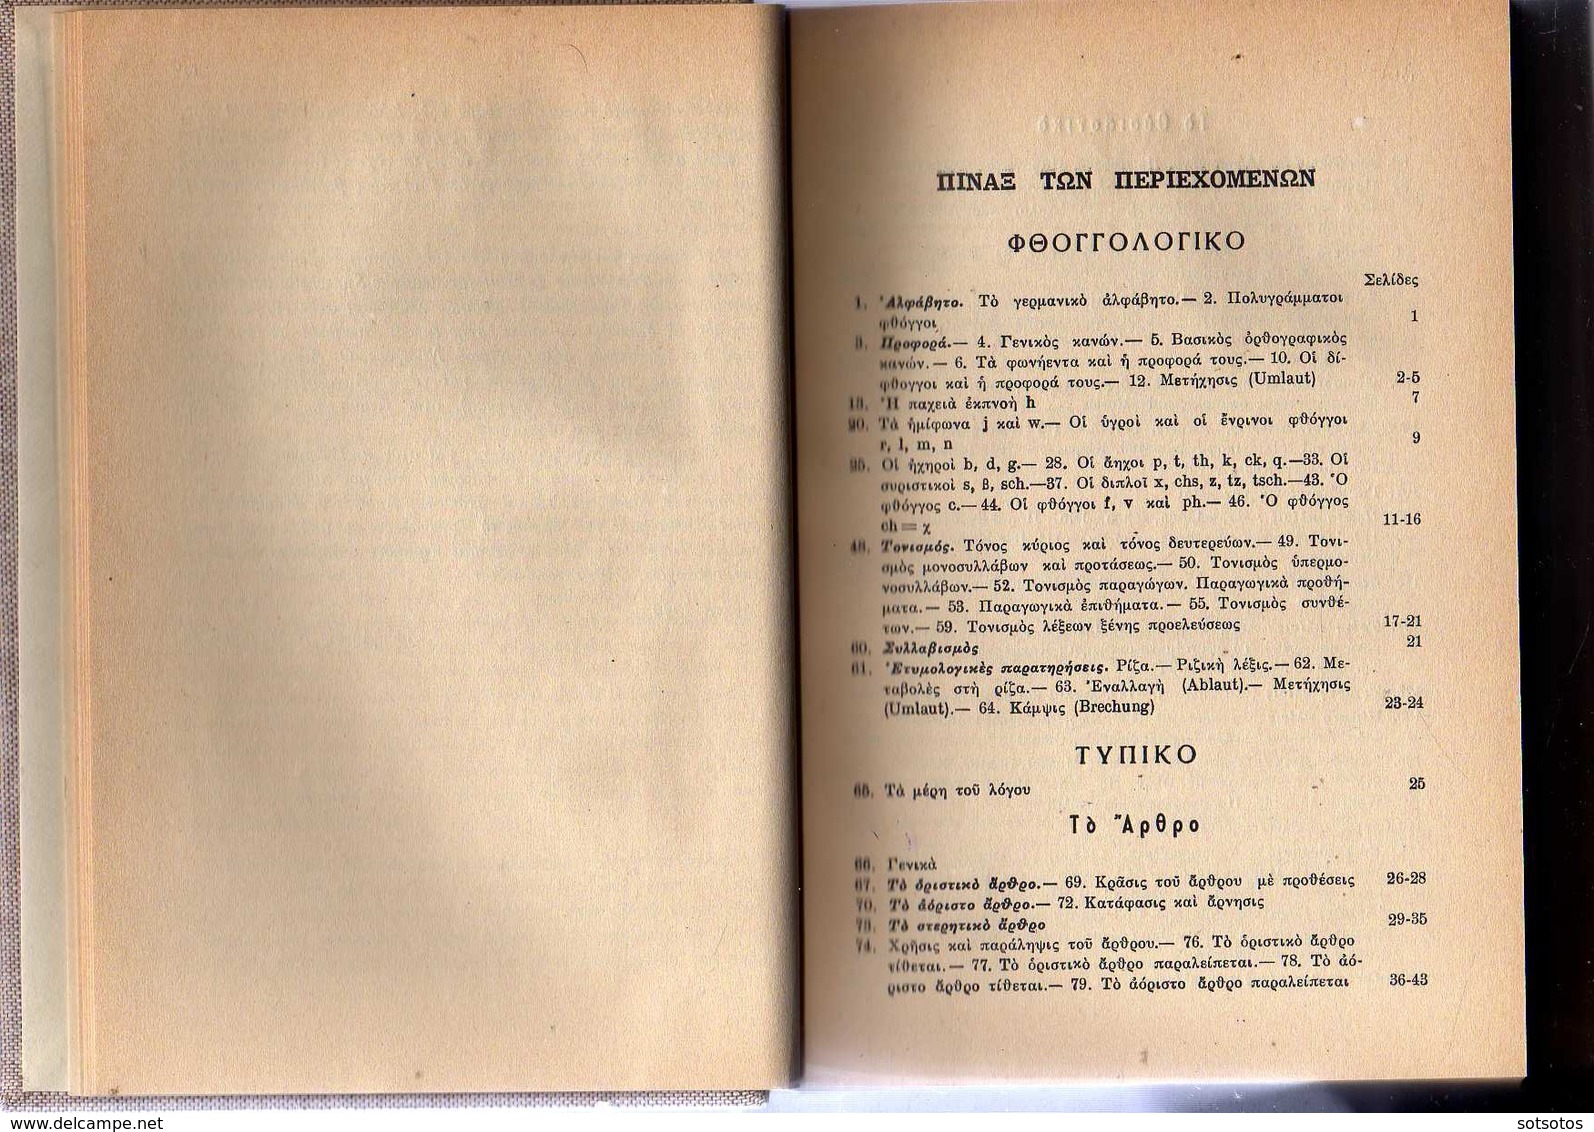 GREEK BOOK: Grammar And Writing Of German Language - (1958) 592 Pages - Excellent Condition  ΓΡΑΜΜΑΤΙΚΗ και ΣΥΝΤΑΚΤΙΚΟΝ - Práctico